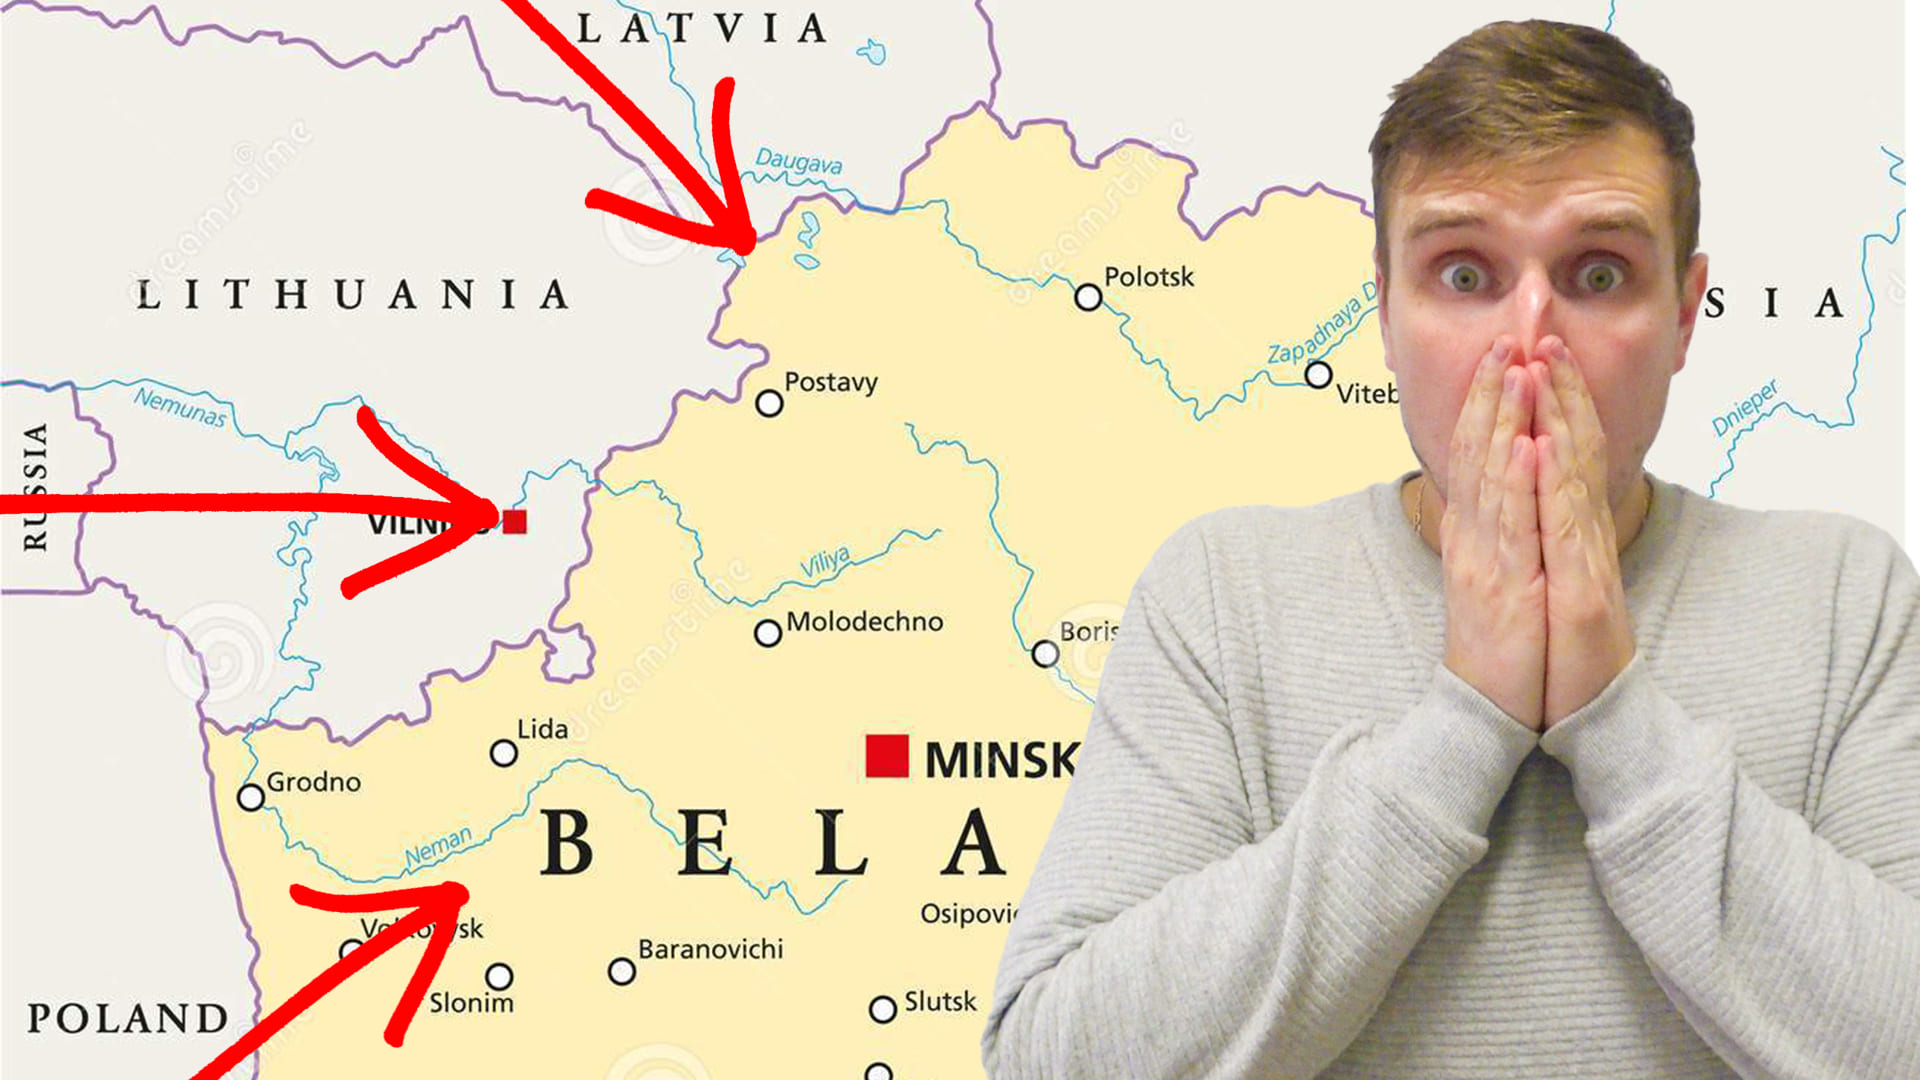 На беларусь готовилось нападение. Карта нападения на Беларусь. Карта откуда на Беларусь готовилось нападение. План нападения на Беларусь.